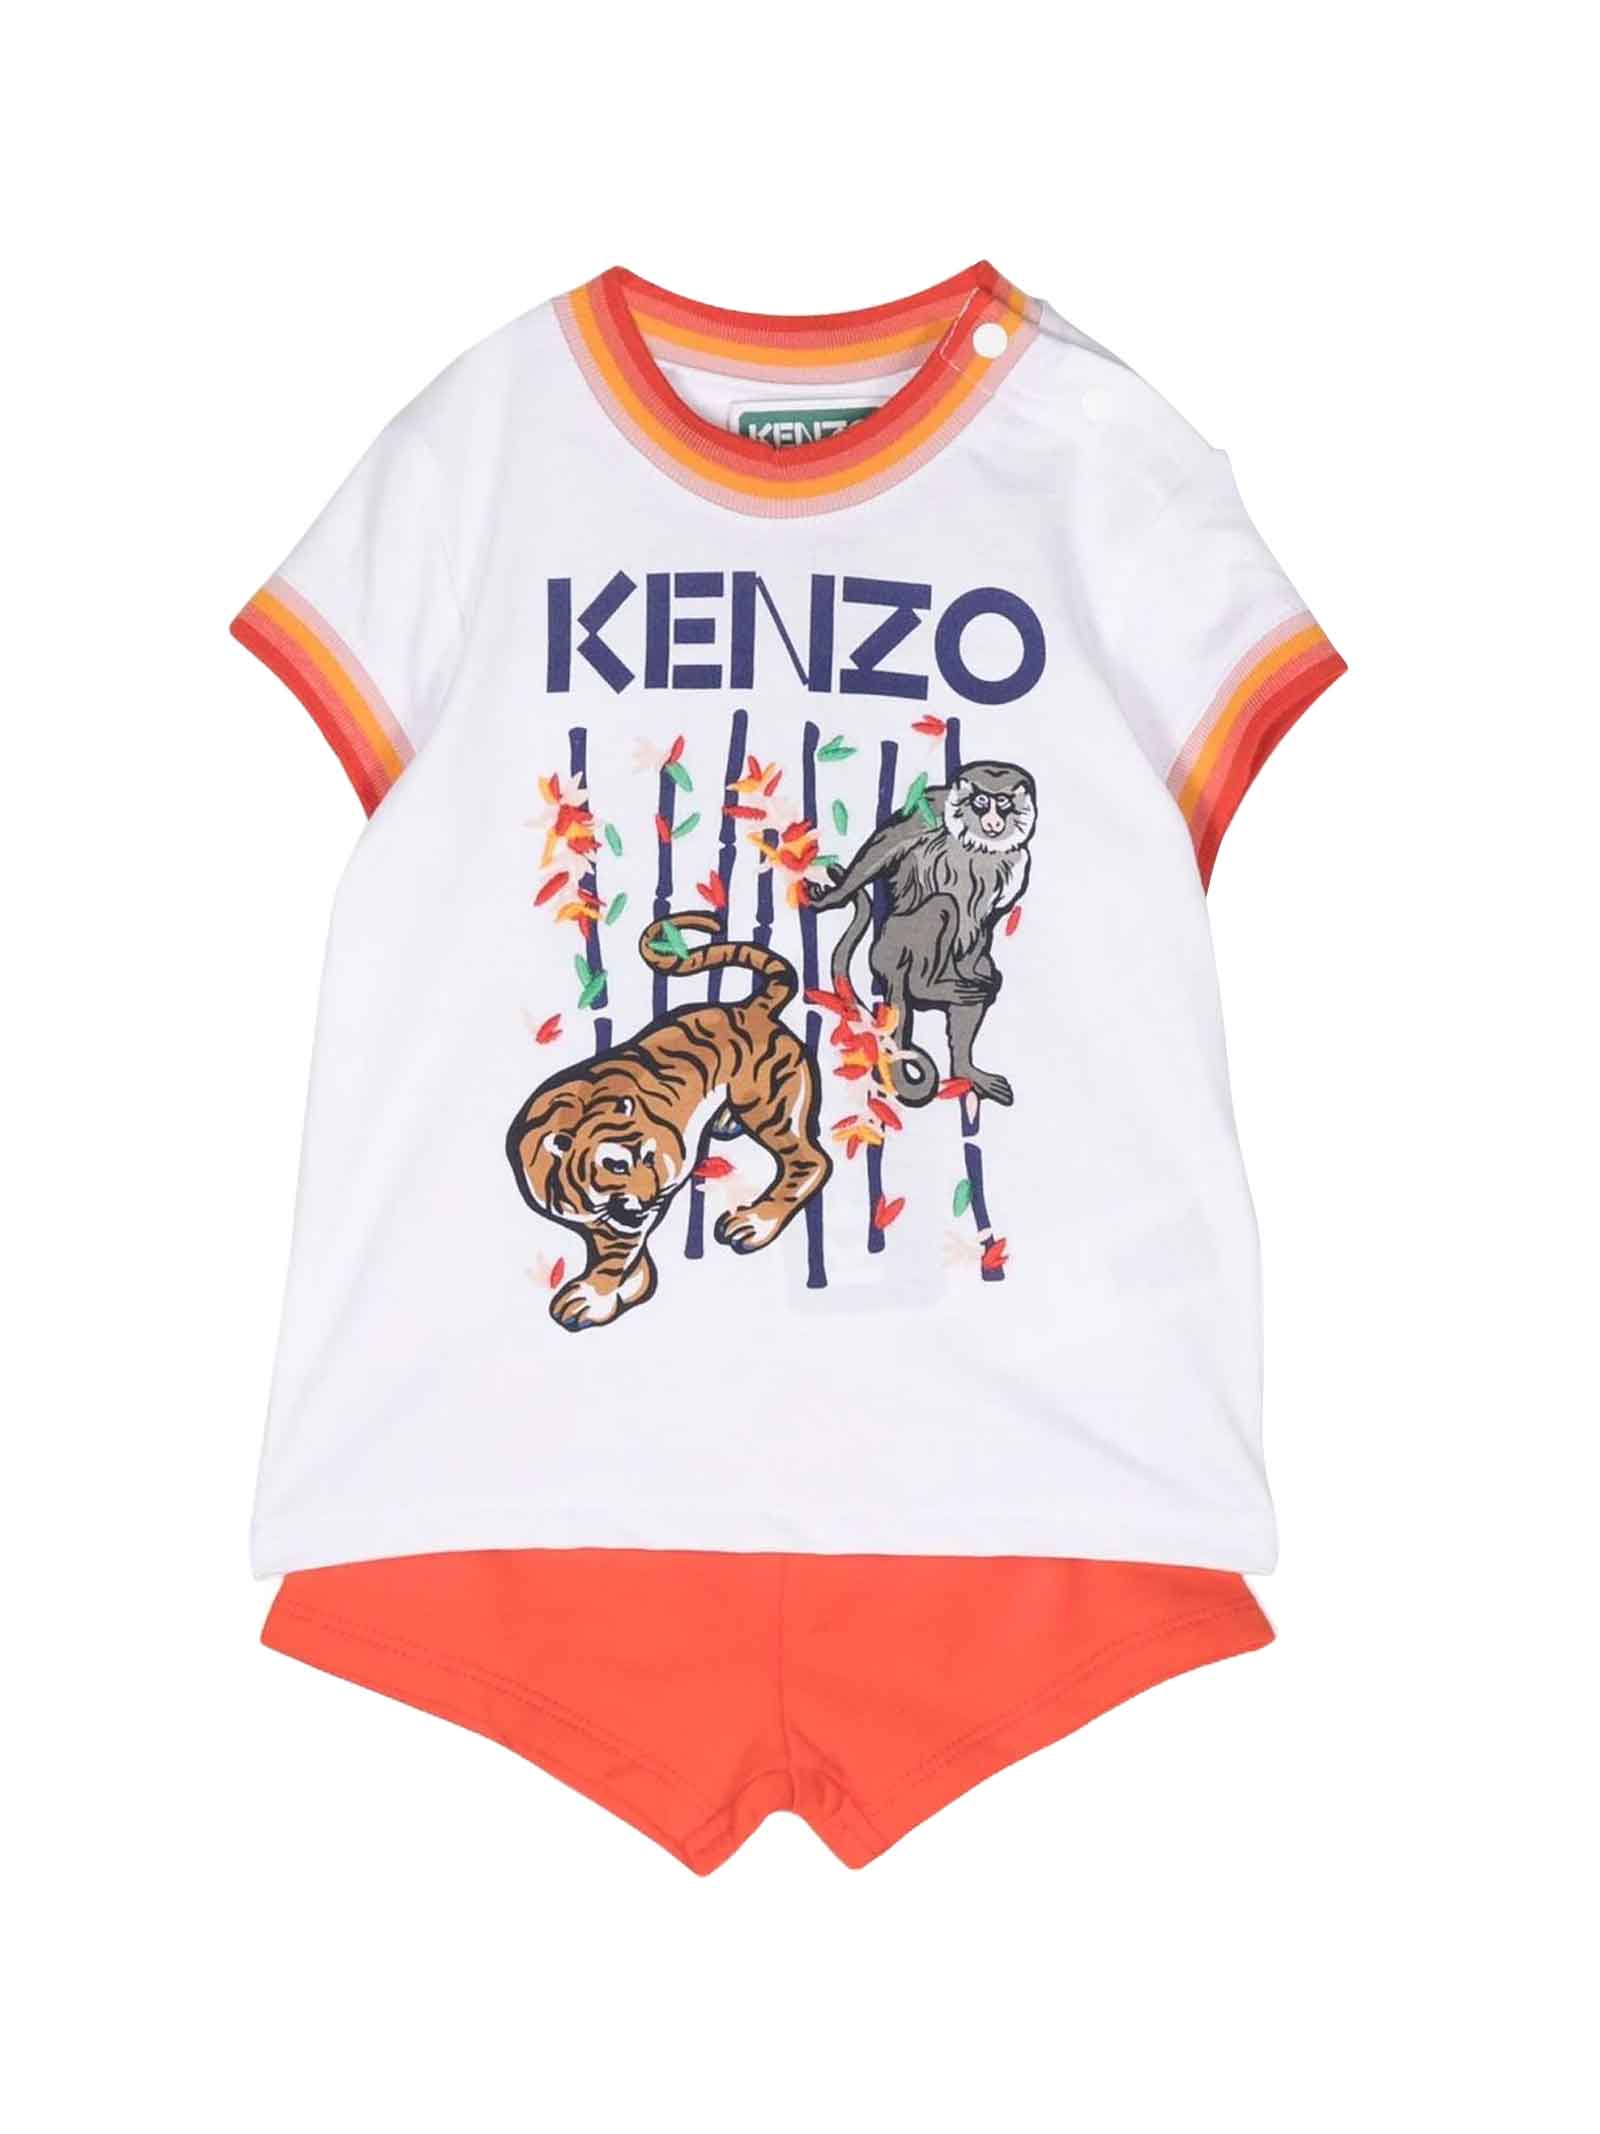 KENZO WHITE/ORANGE SUIT BABY GIRL